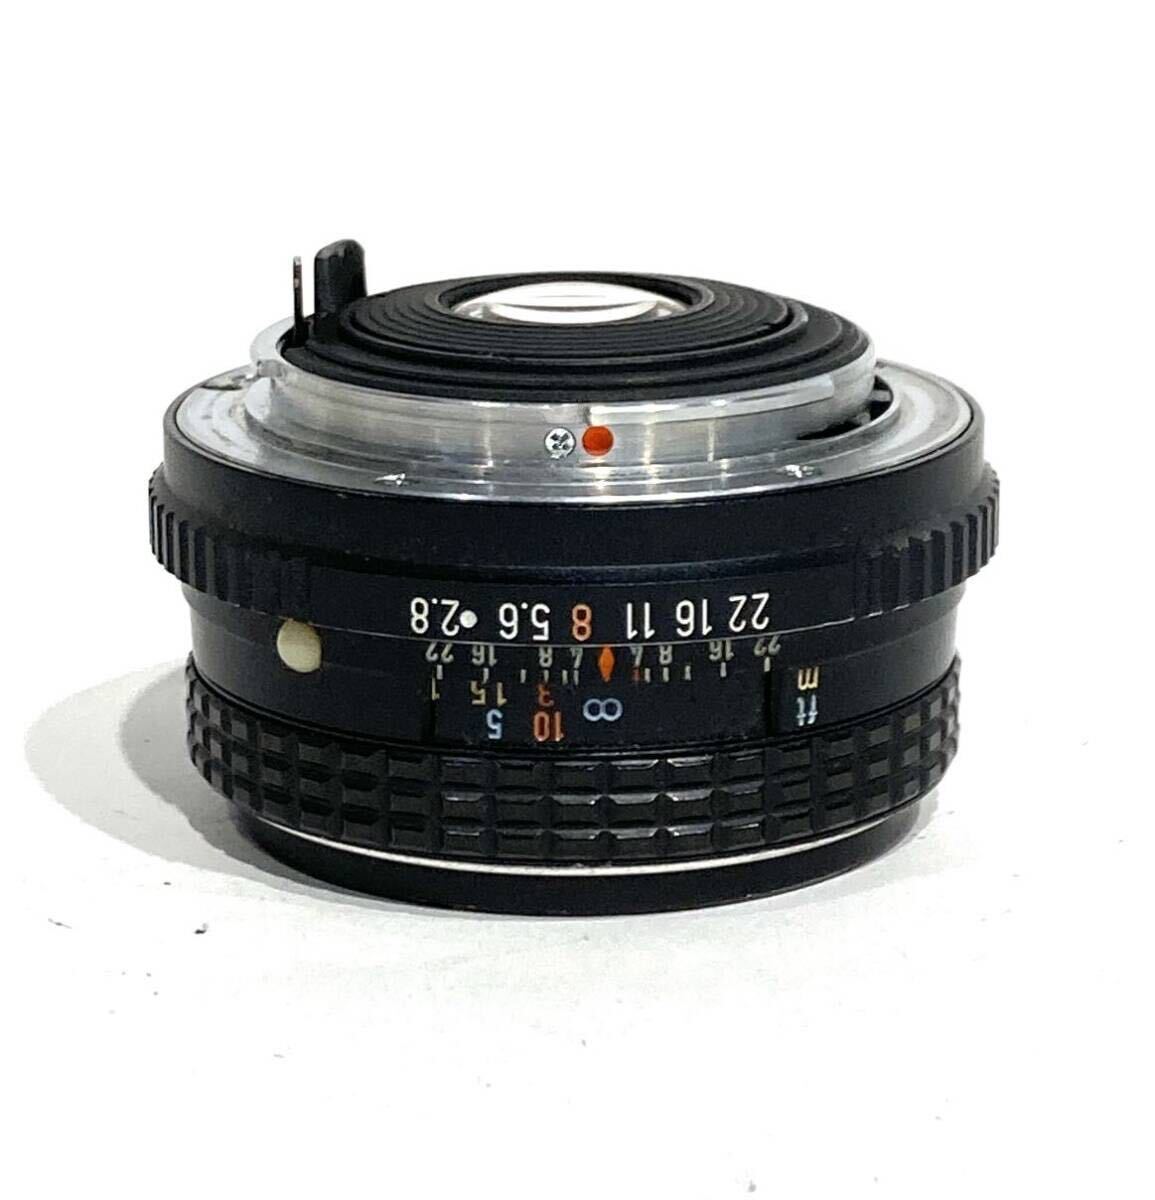 ★bk-681 ASAHI SMC PENTAX-M 1:2:8 28mm/レンズ ペンタックス(T178-2)の画像3